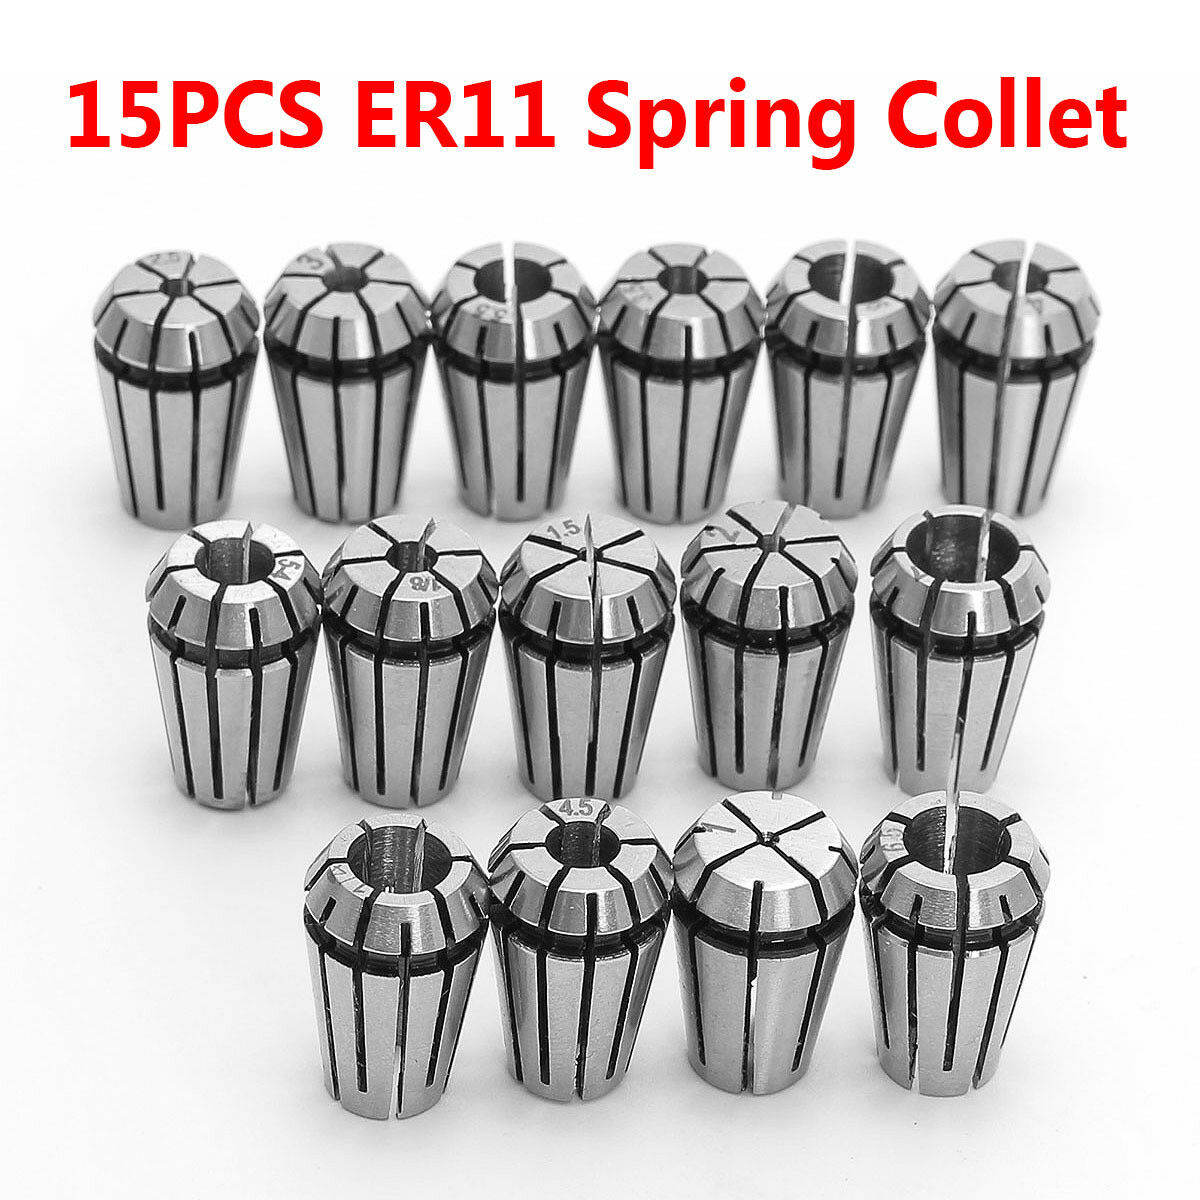 15 Pcs Er11 Spring Collet Chuck Set For Cnc Milling Lathe Tool Engraving Machine